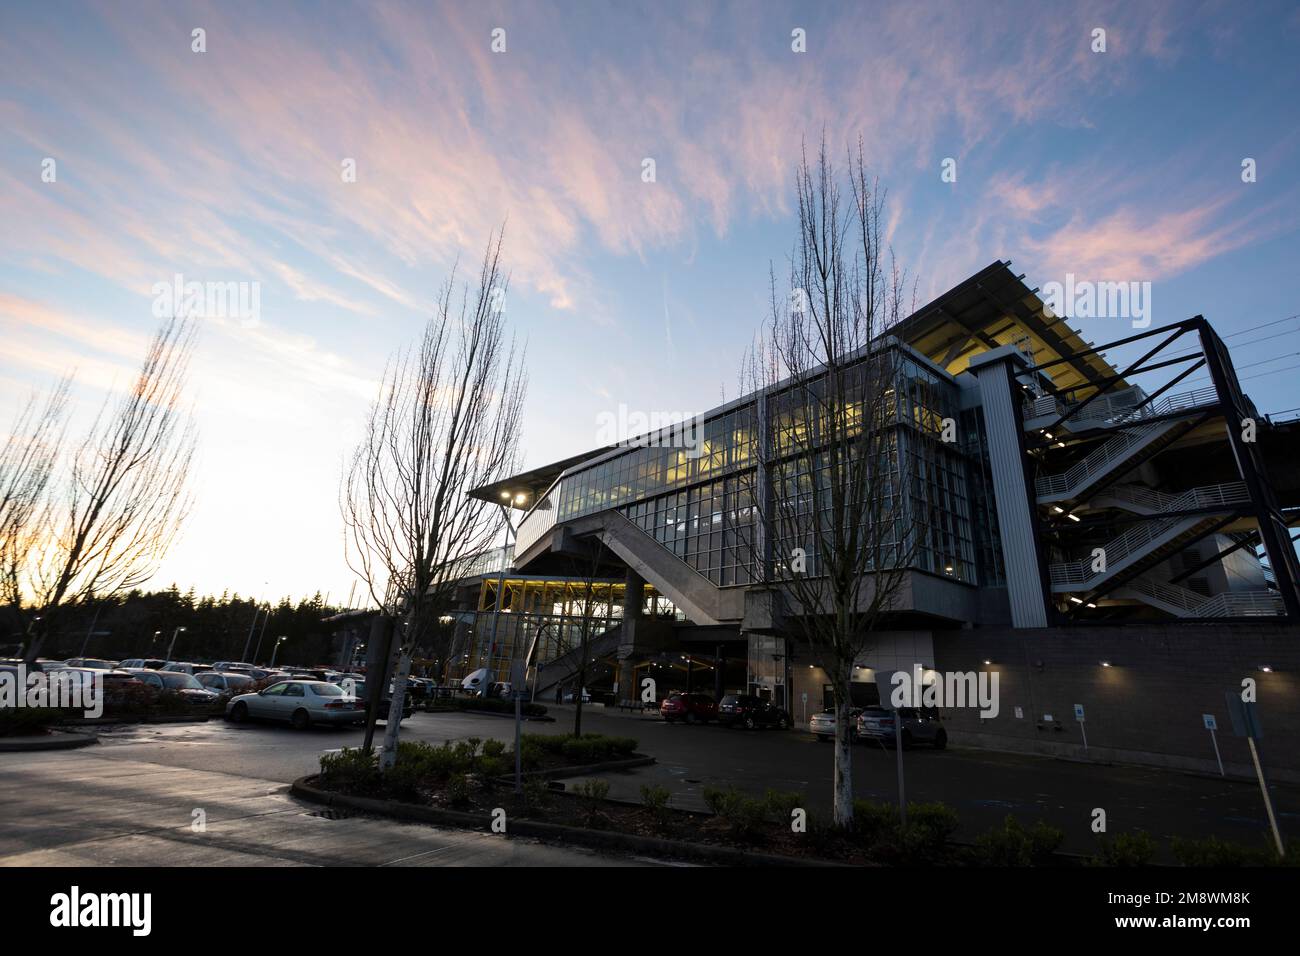 The sun rises over the Tukwila International Boulevard Link Light Rail Station in Tukwila, Washington. Stock Photo